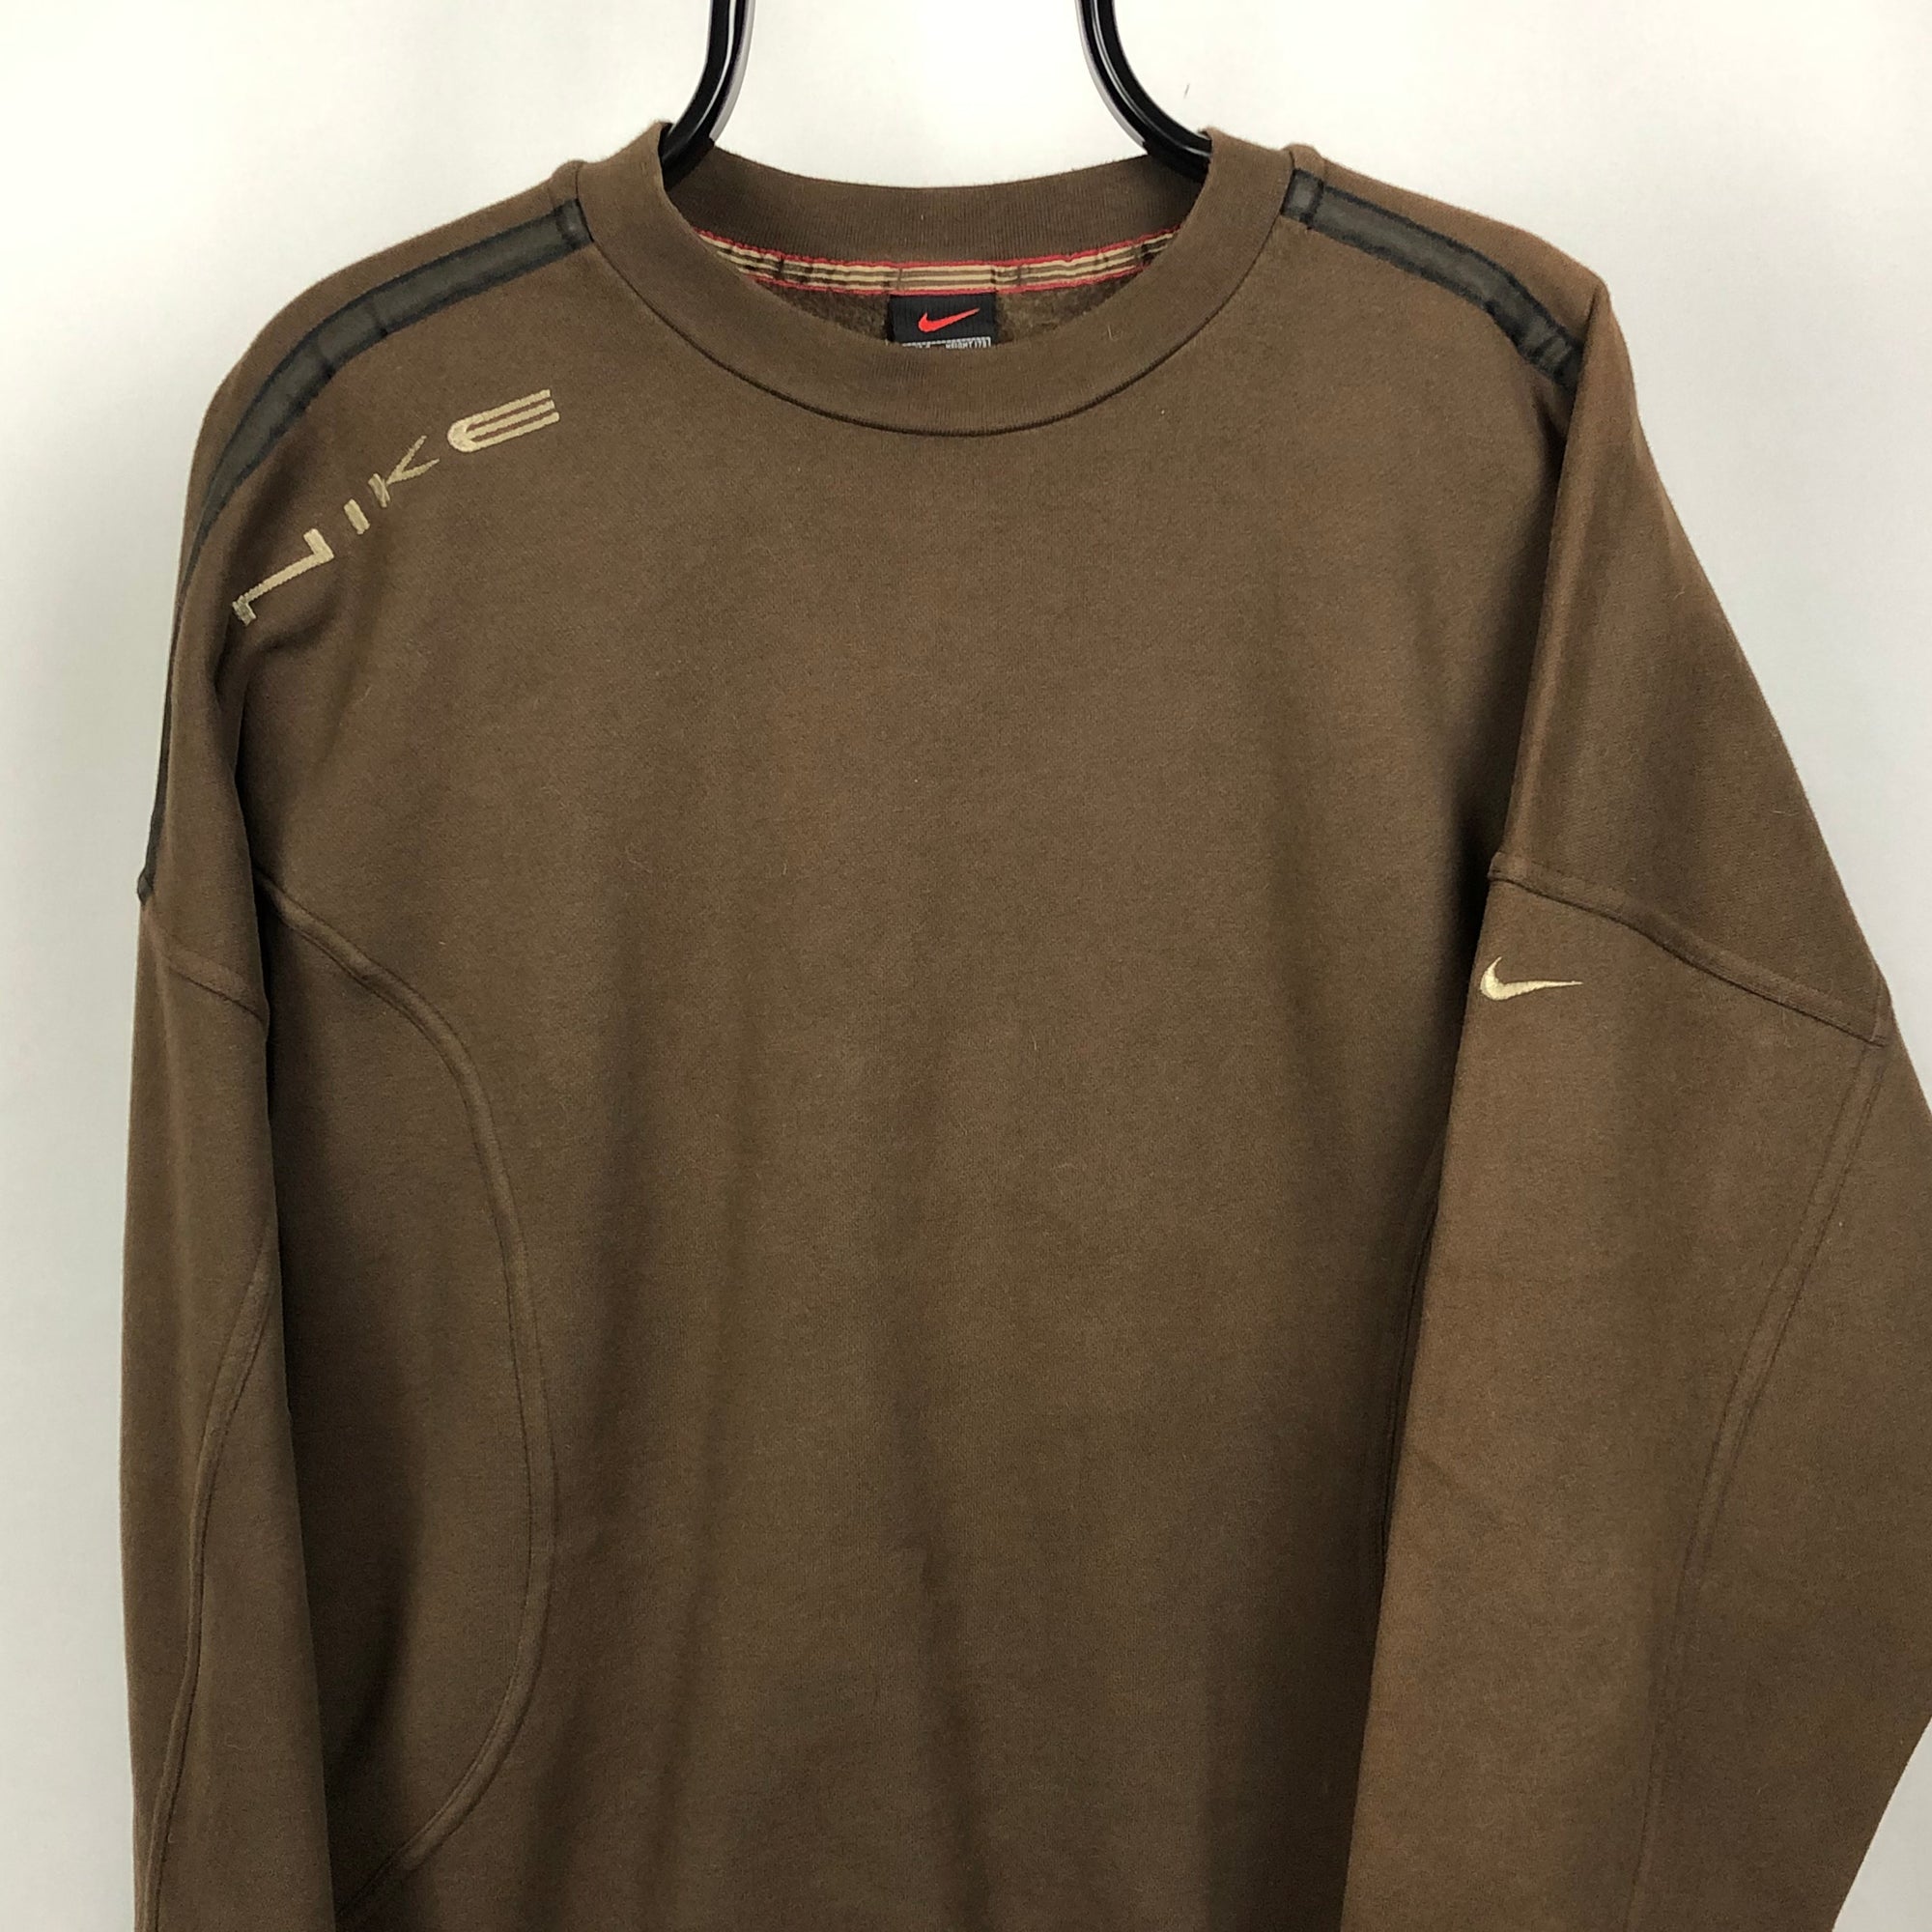 Vintage Nike Spellout Sweatshirt in Brown - Men's Medium/Women's Large